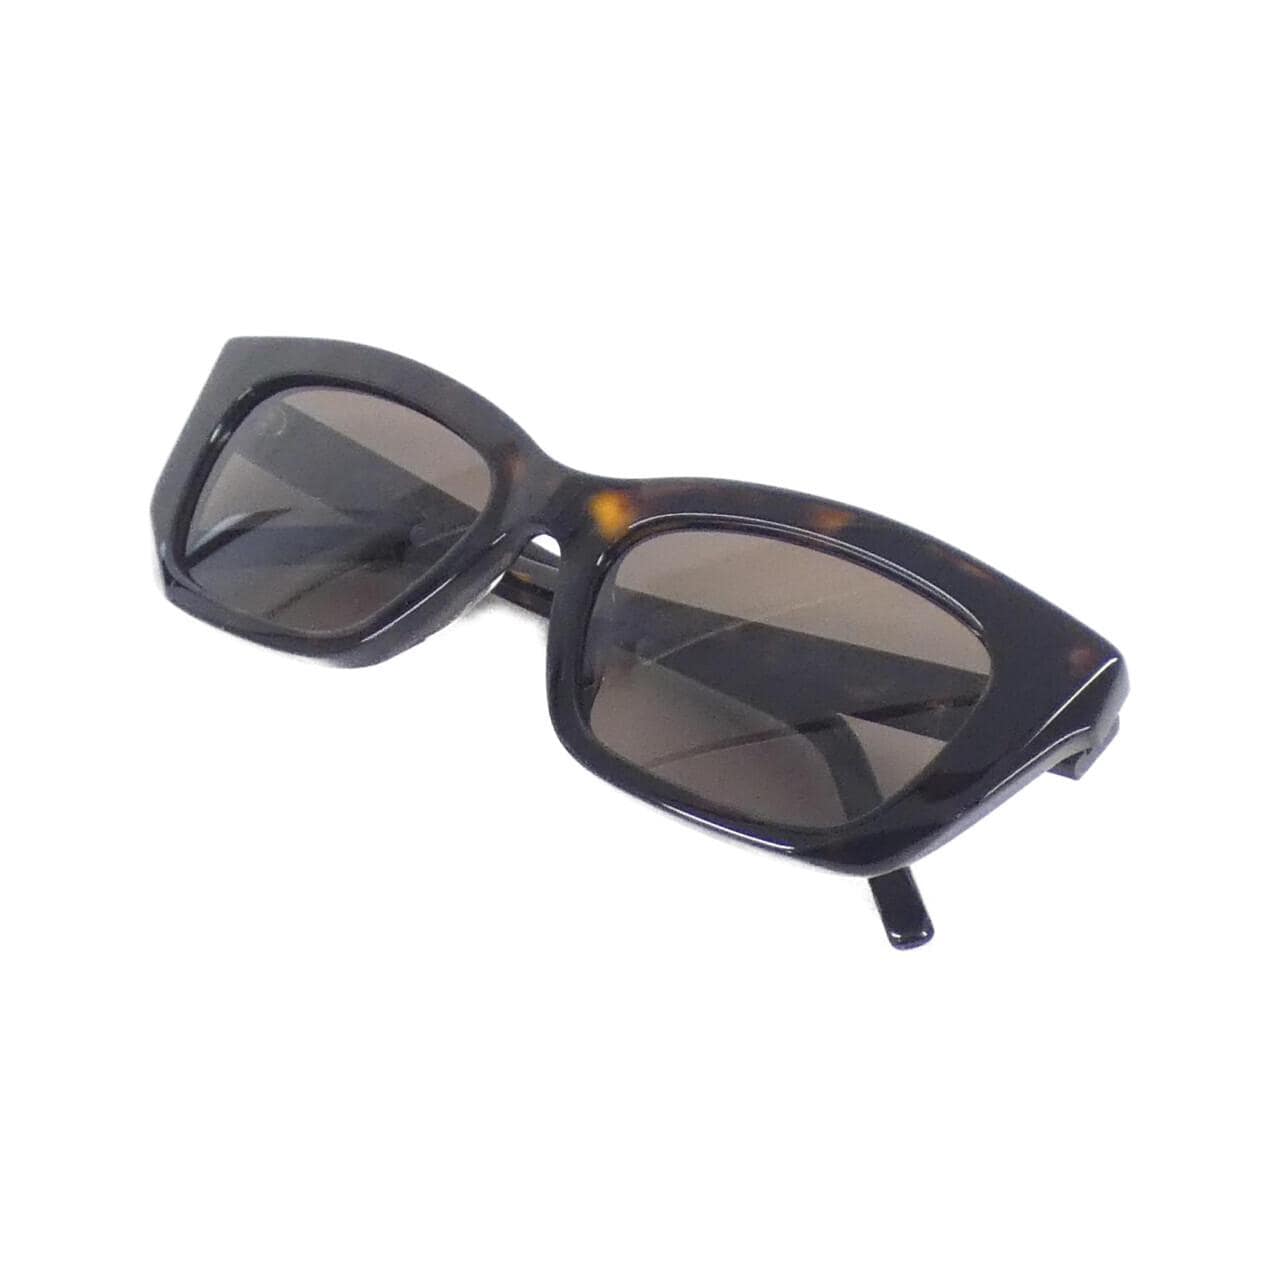 [BRAND NEW] GIVENCHY 40015U Sunglasses